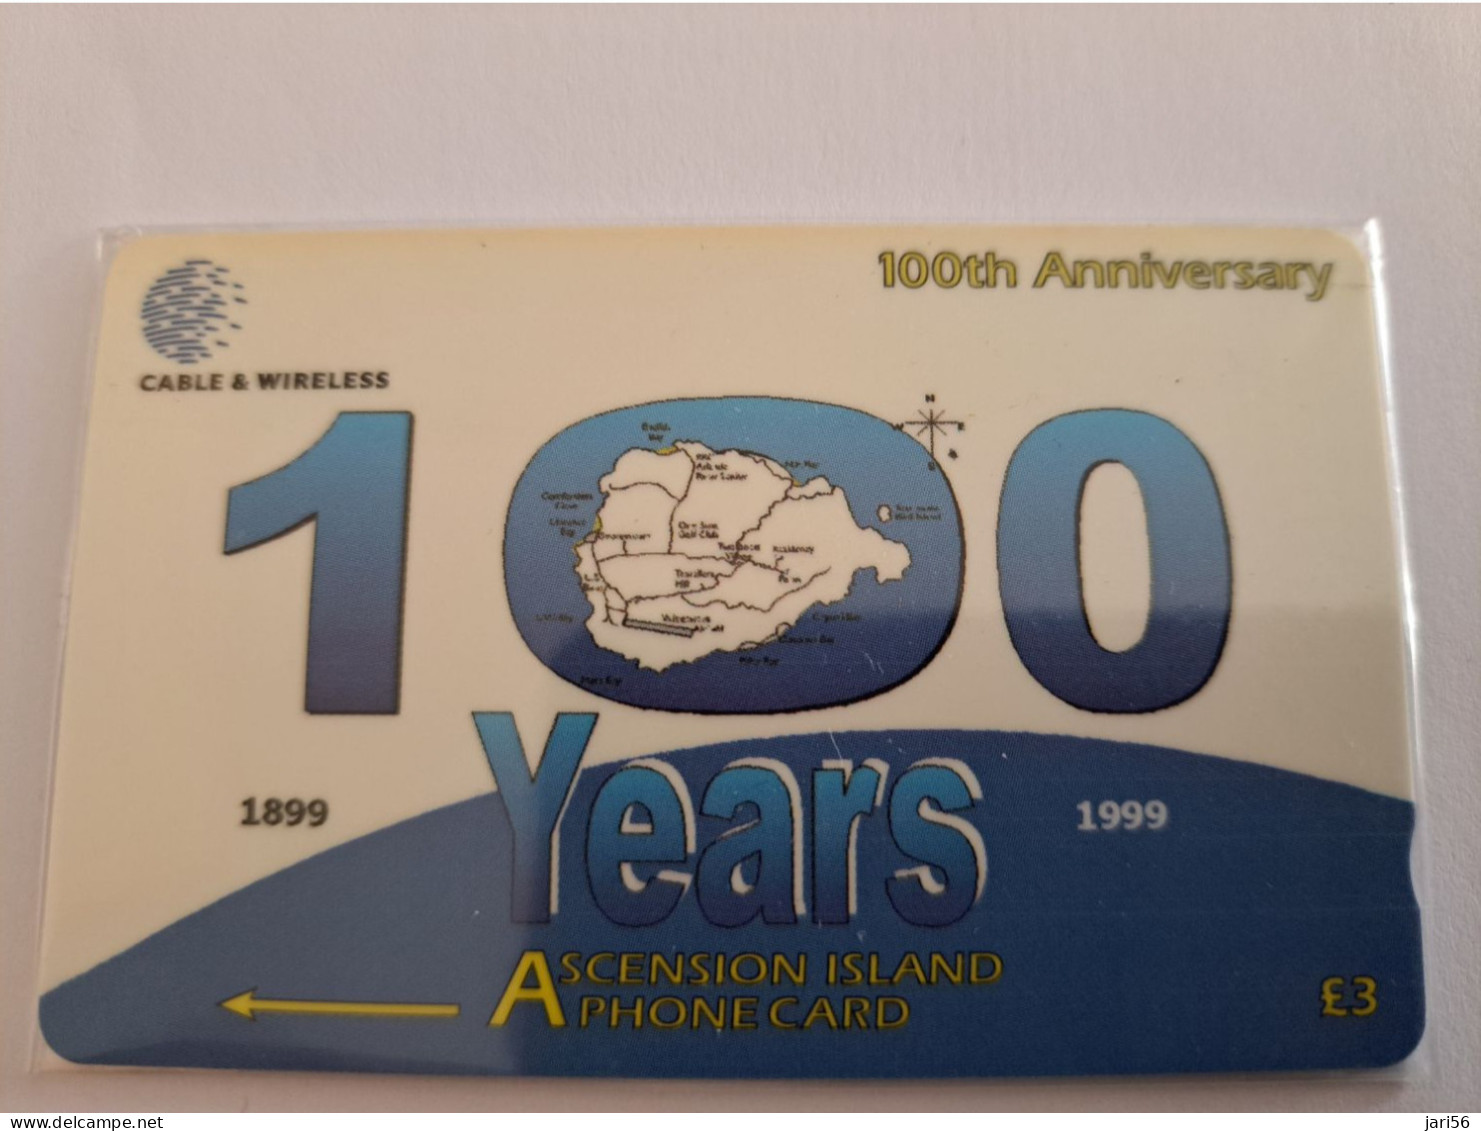 ASCENSION ISLAND   3 Pound  / 100 YEARS ANNIVERSARY /ASC-M-308A/  308CASA  MINT IN WRAPPER    NEW  Logo C&W **13663** - Islas Ascensión